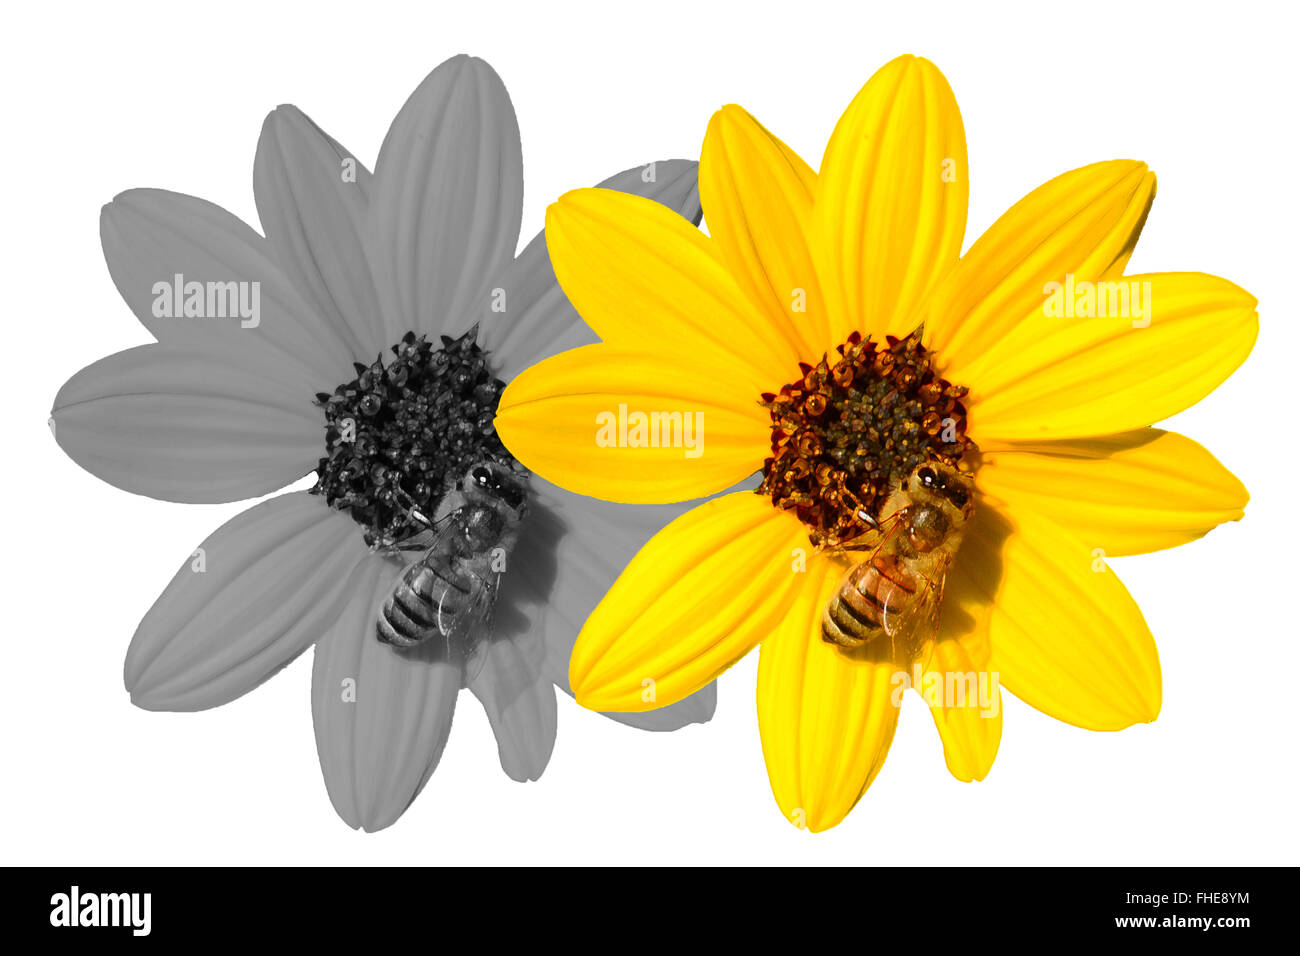 Wildflowers Honey Bees Illustration Art Stock Photo